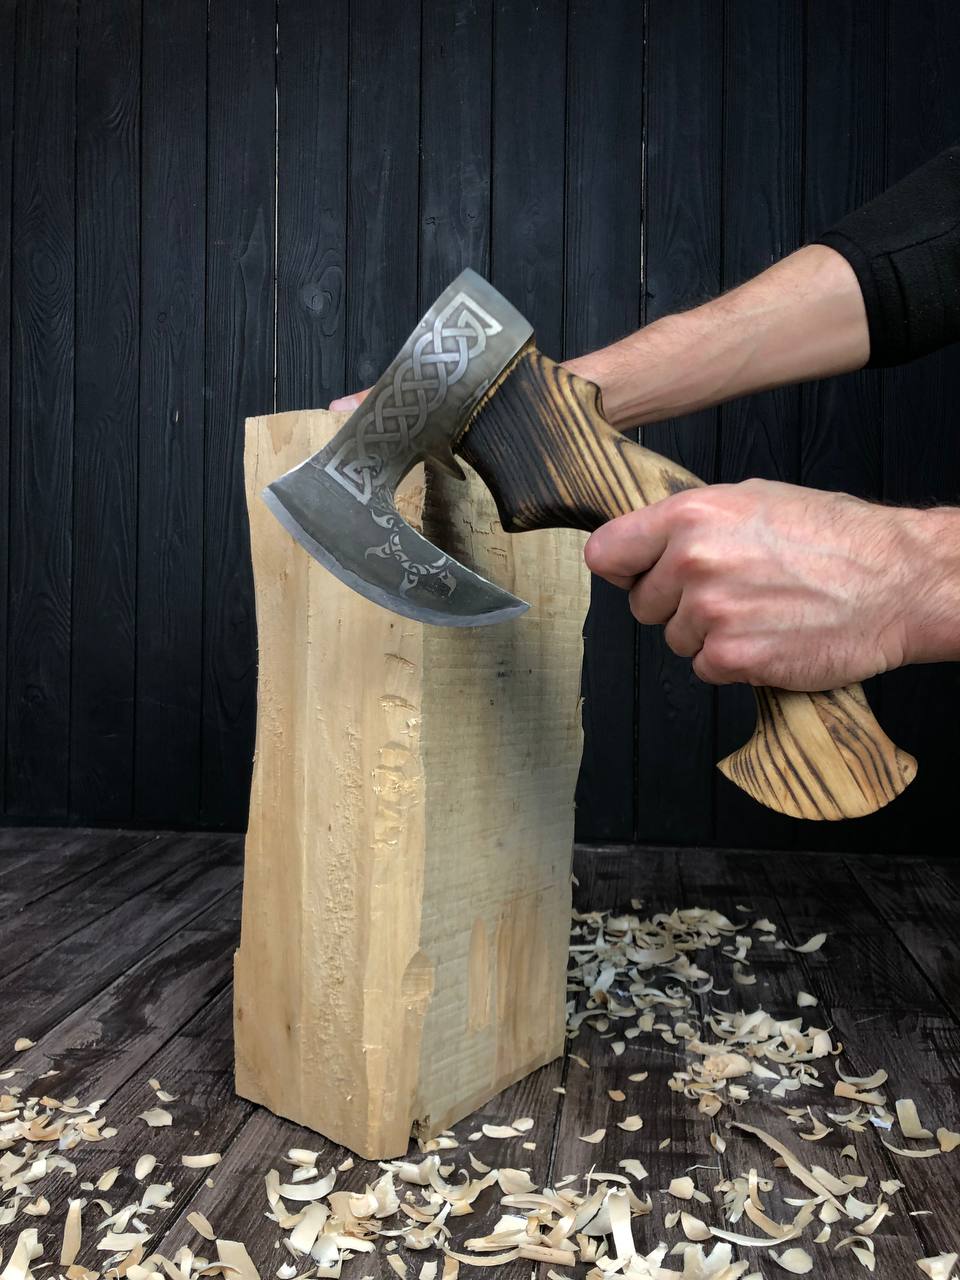 Wood carving axe, hand carpentry tool STRYI, Profi